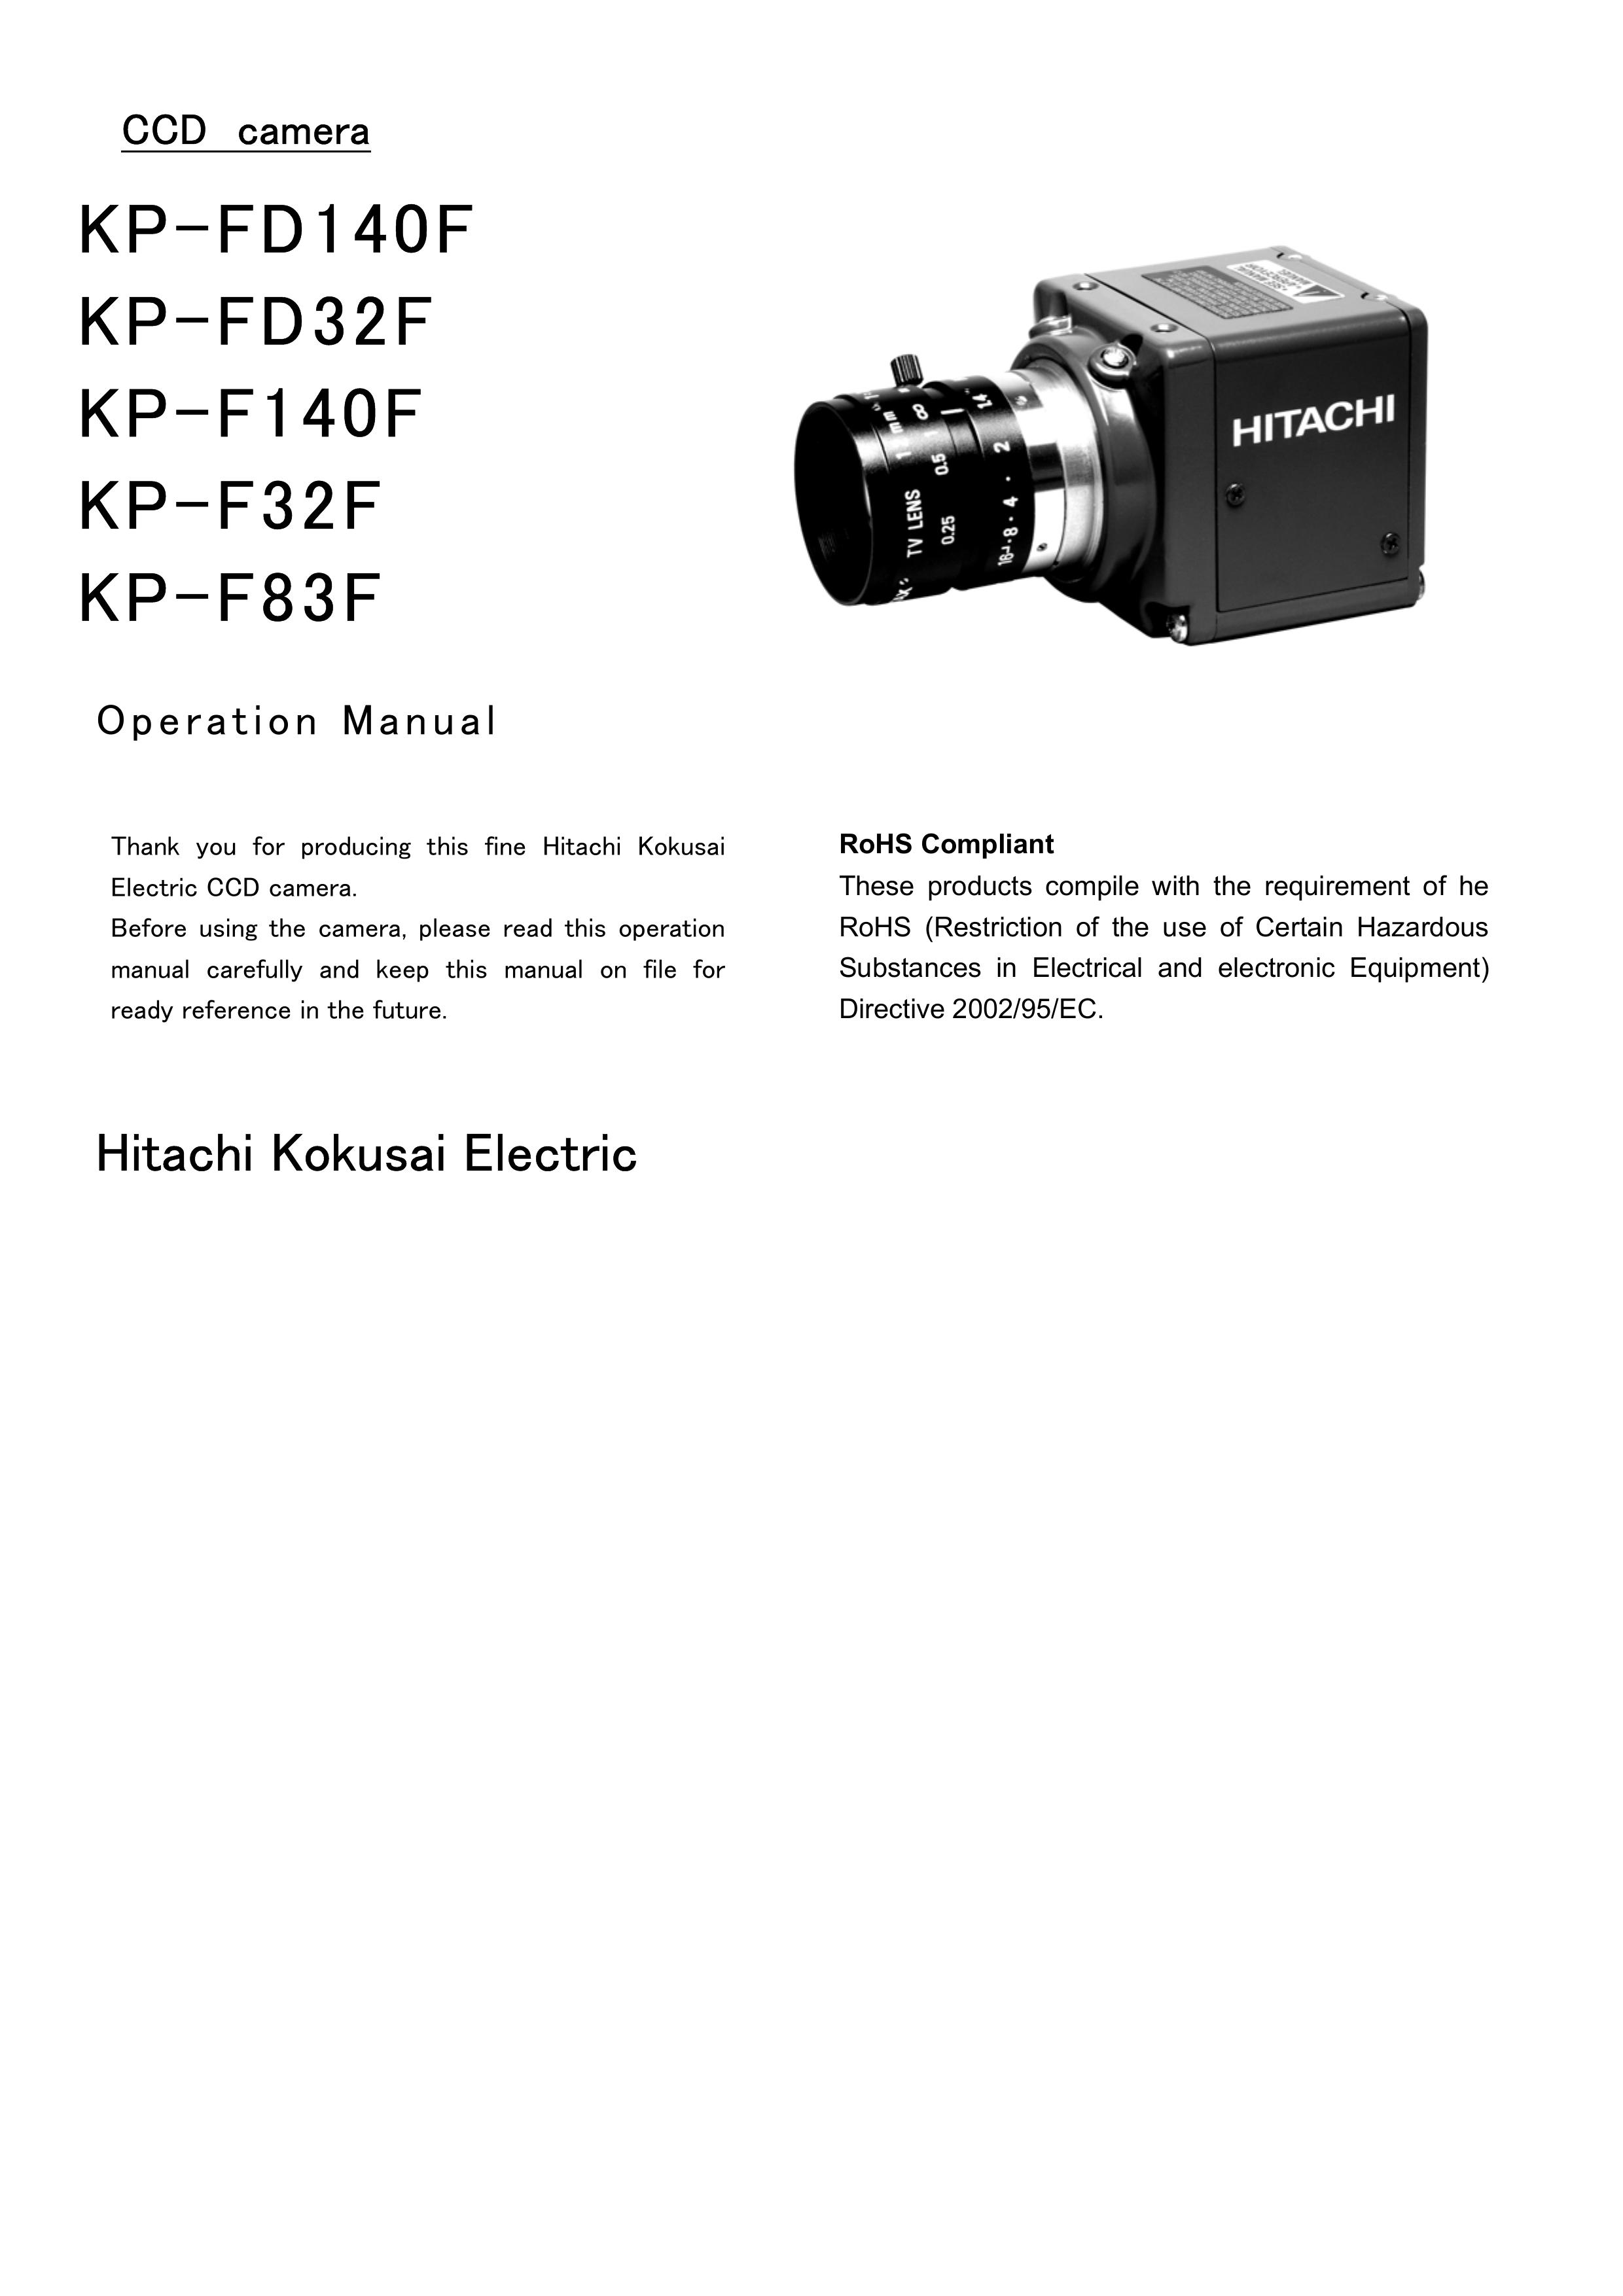 Hitachi KP-F32F Digital Camera User Manual